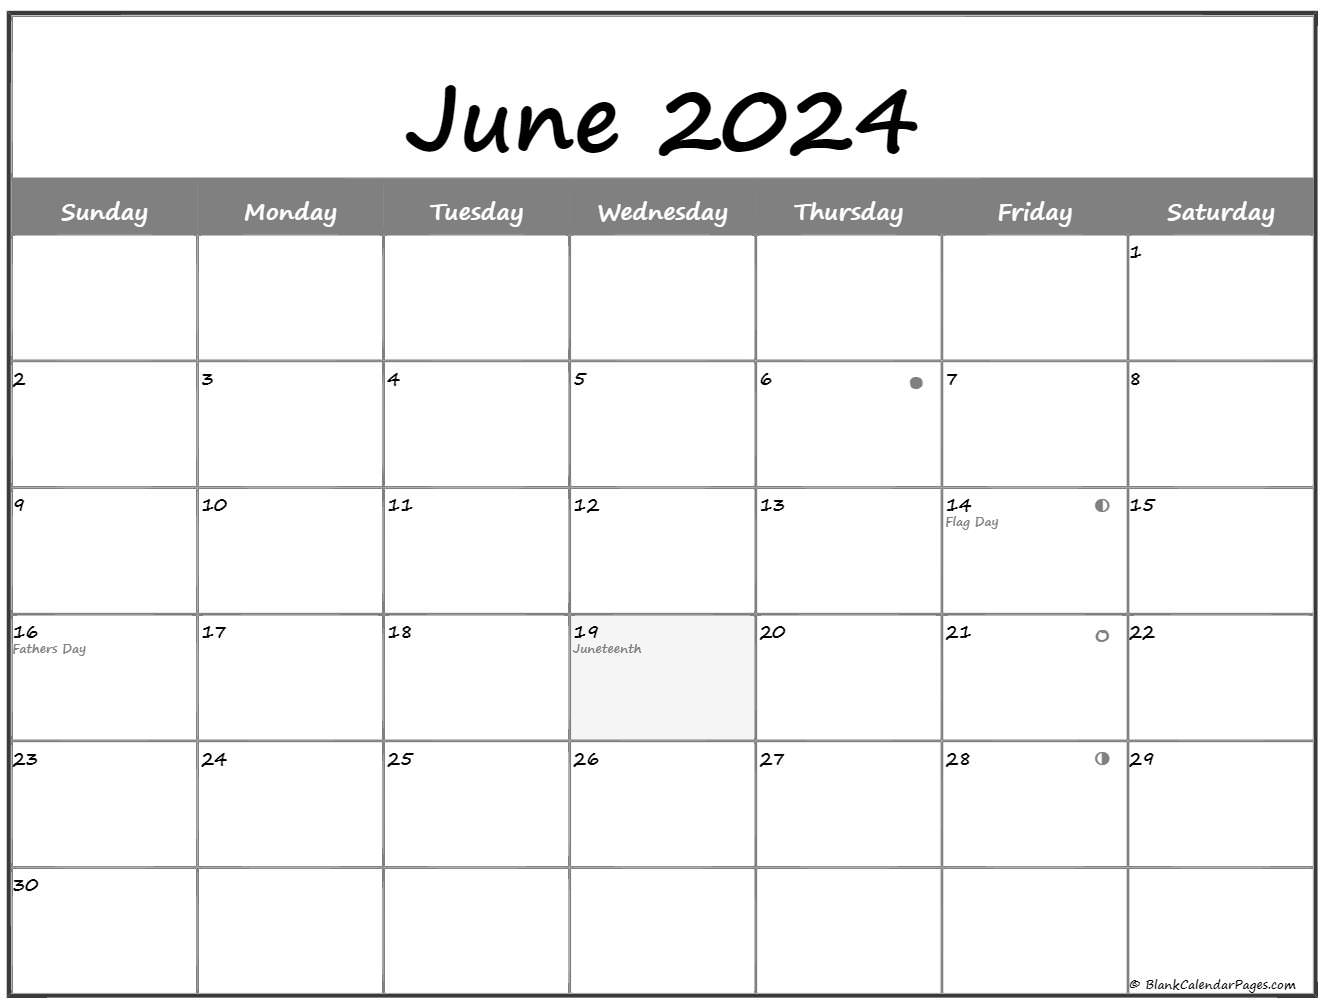 Moon Phase Calendar June 2022 June 2022 Lunar Calendar | Moon Phase Calendar